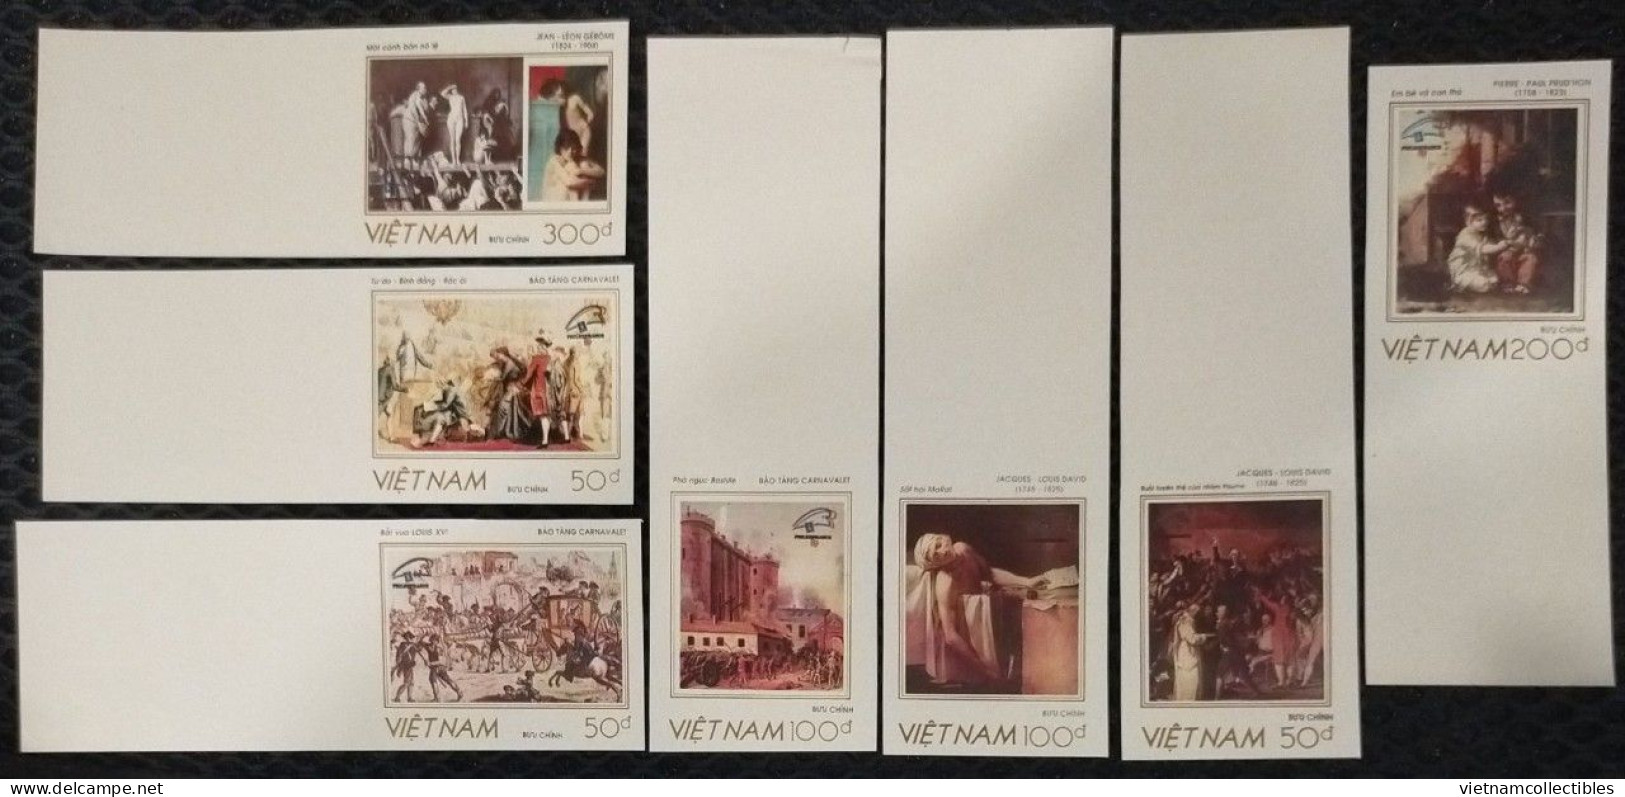 Vietnam Viet Nam MNH Imperf Stamps 1989 : World Philatelic Exhibition / Art Painting (Ms574) - Vietnam